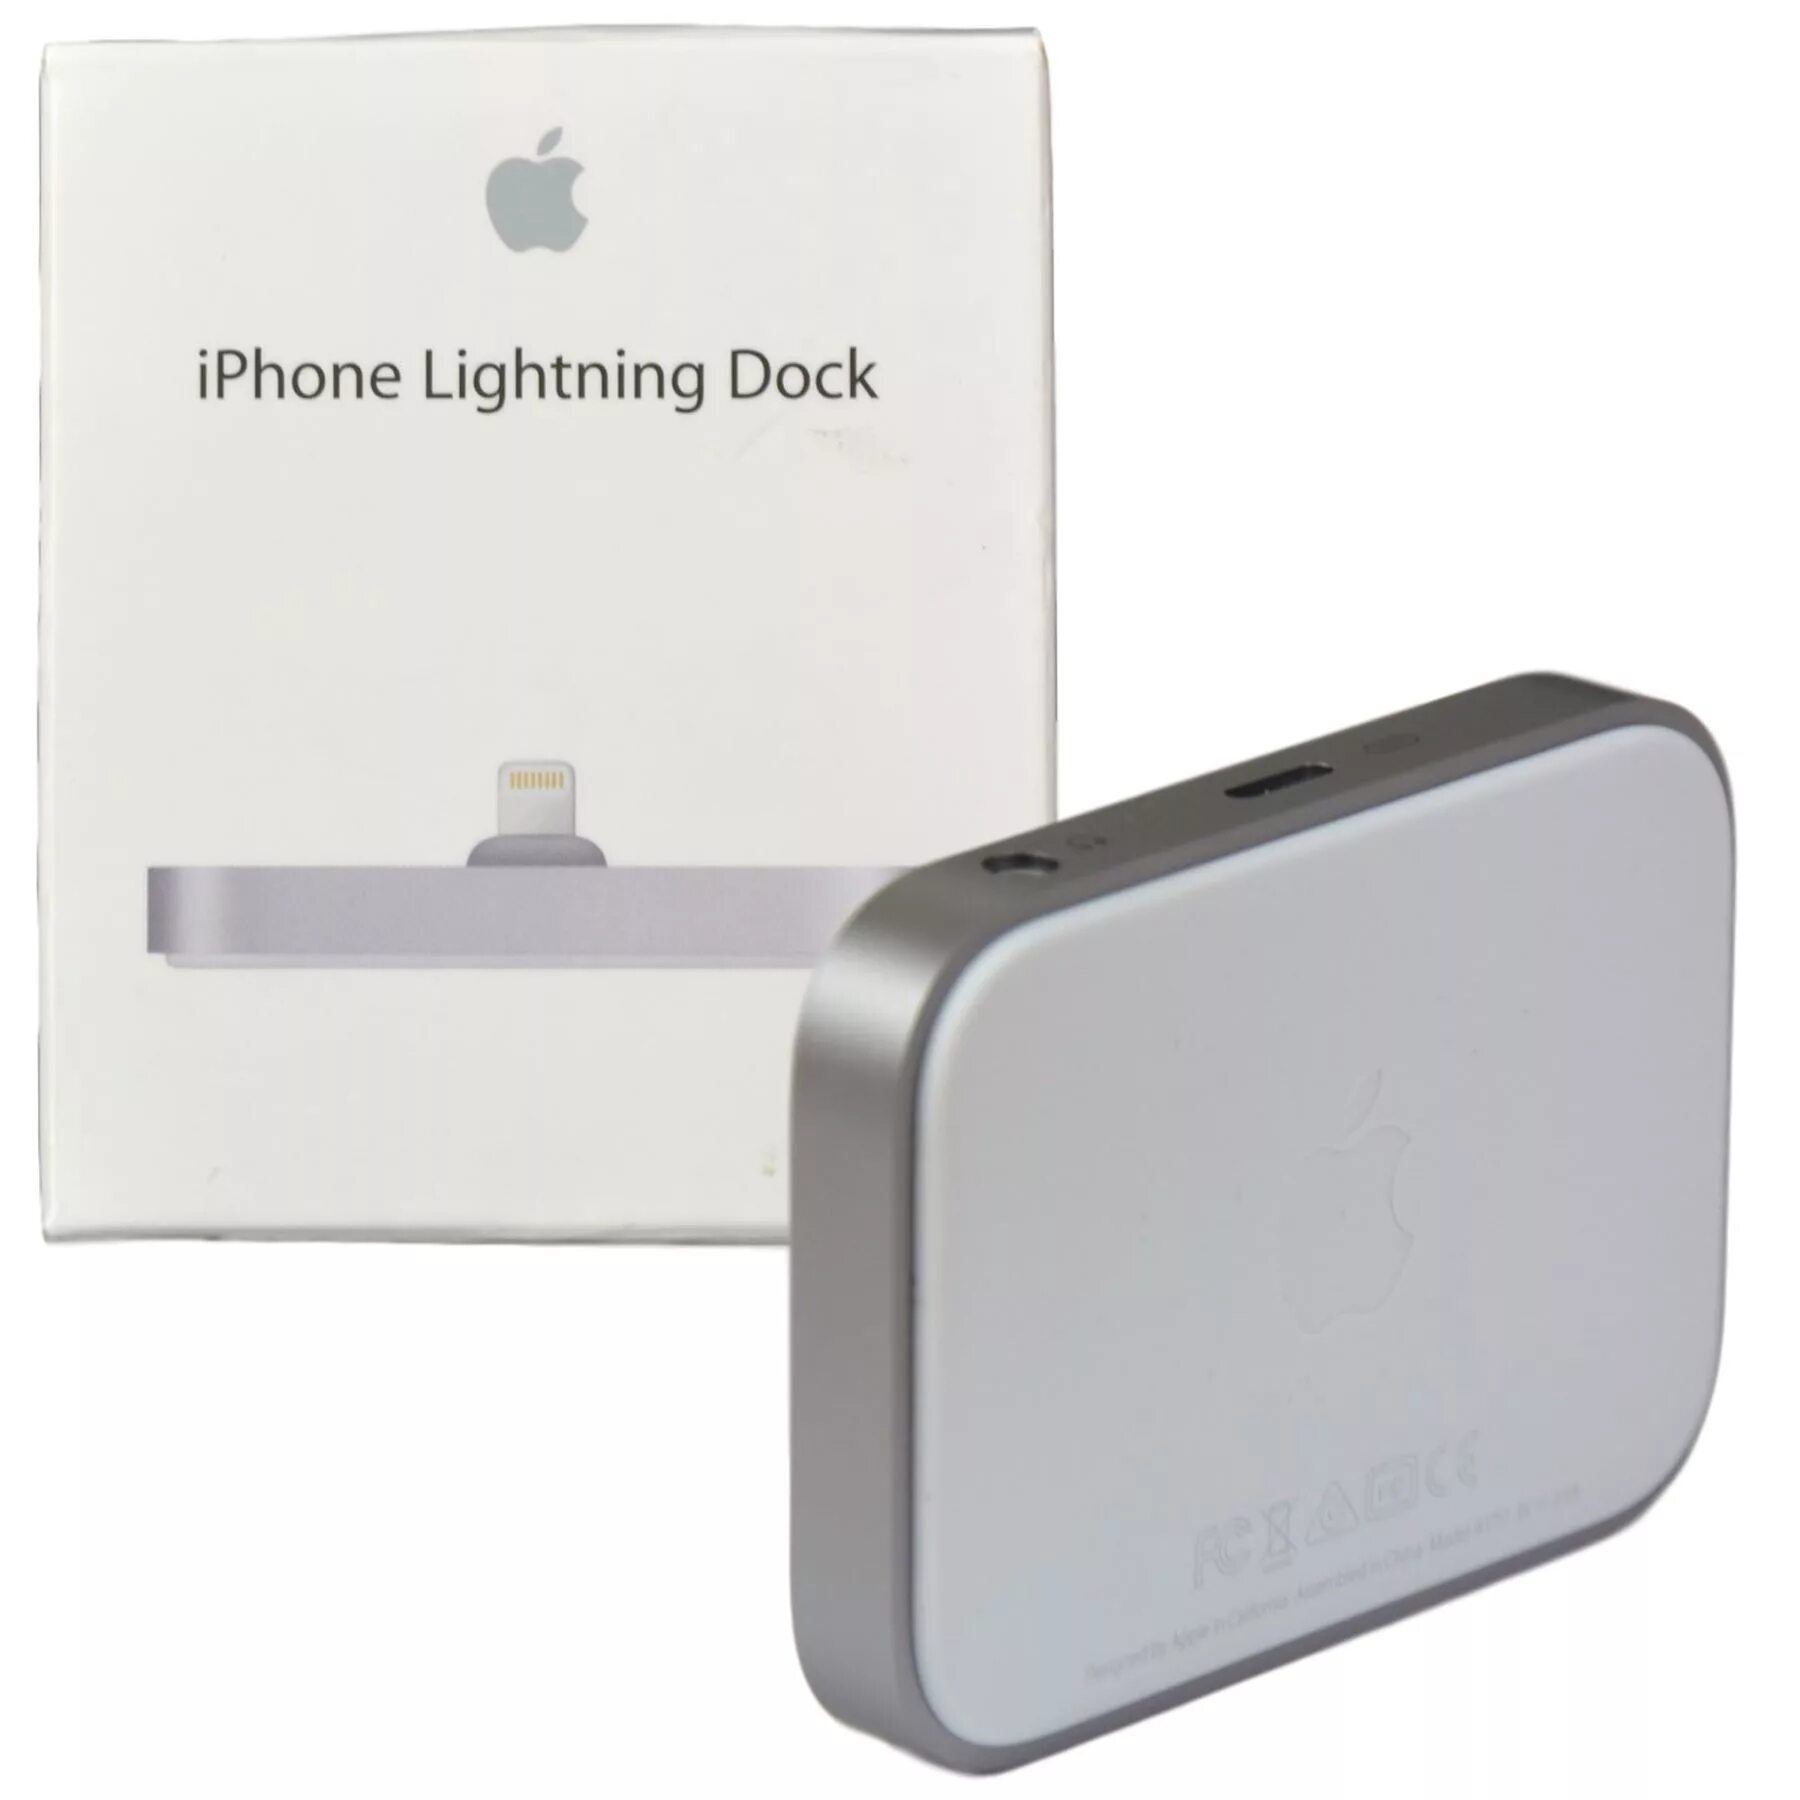 Станция для apple iphone. Док-станция Apple iphone Lightning Dock ml8j2zm/a (Silver). Iphone Lightning Dock a1605. Iphone Apple iphone Lightning Dock. Док-станция для iphone Apple iphone Lightning Dock Black (mnn62zm/a).